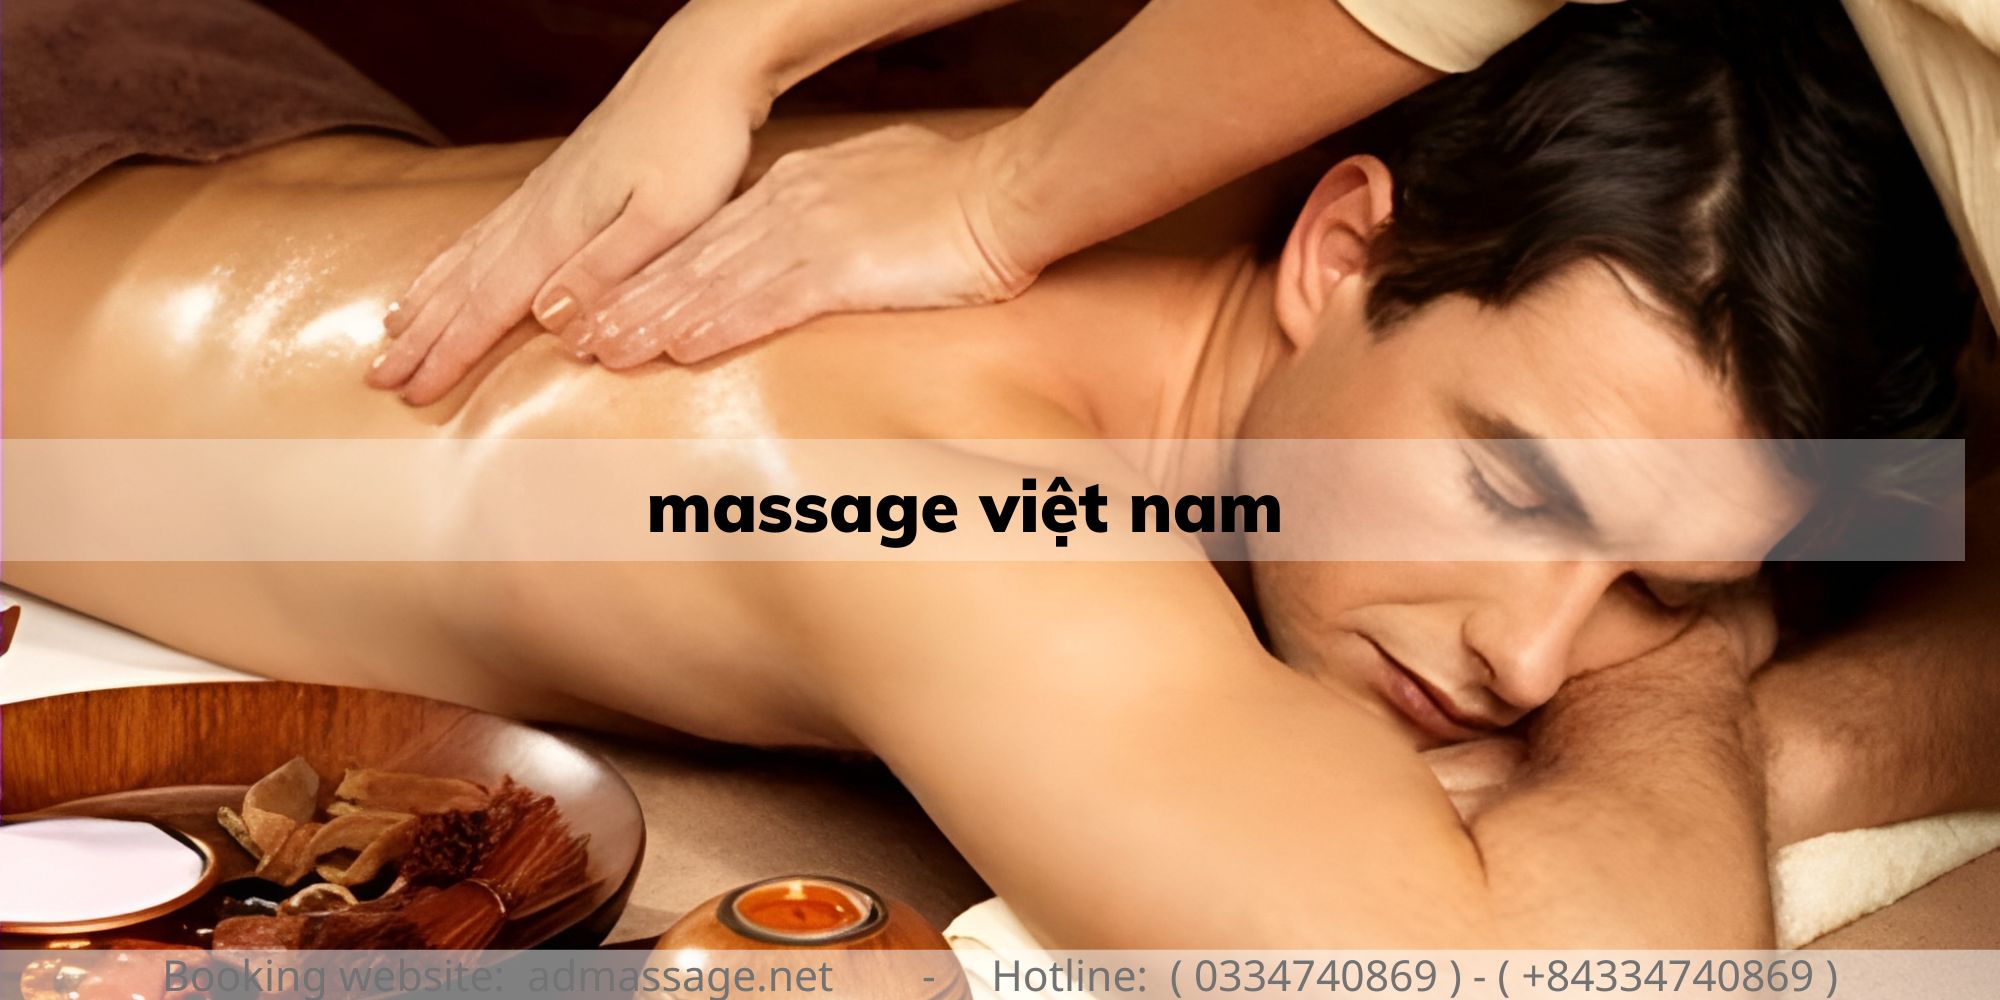 massage việt nam